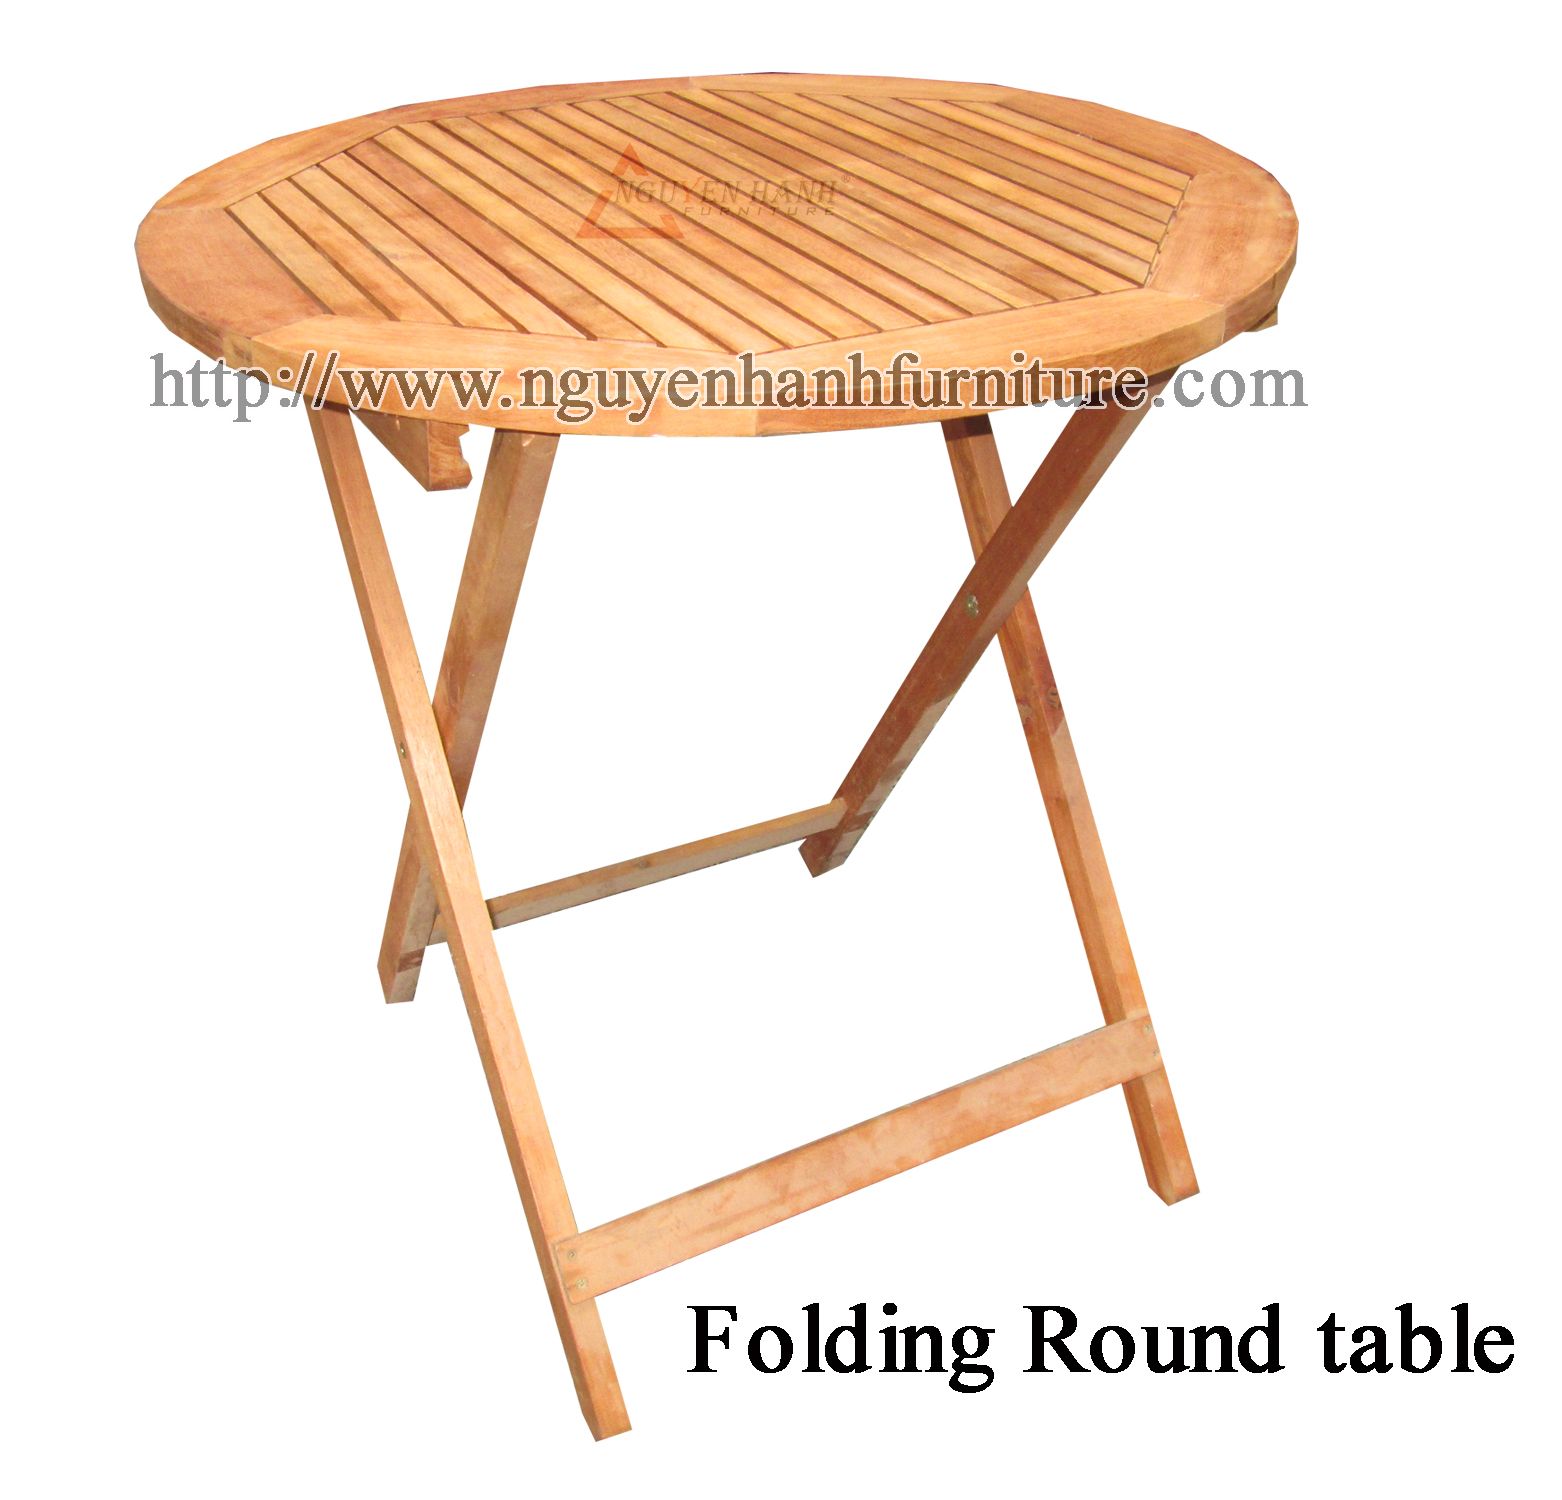 Name product: Folding Round table 70 - Description: Eucalyptus wood